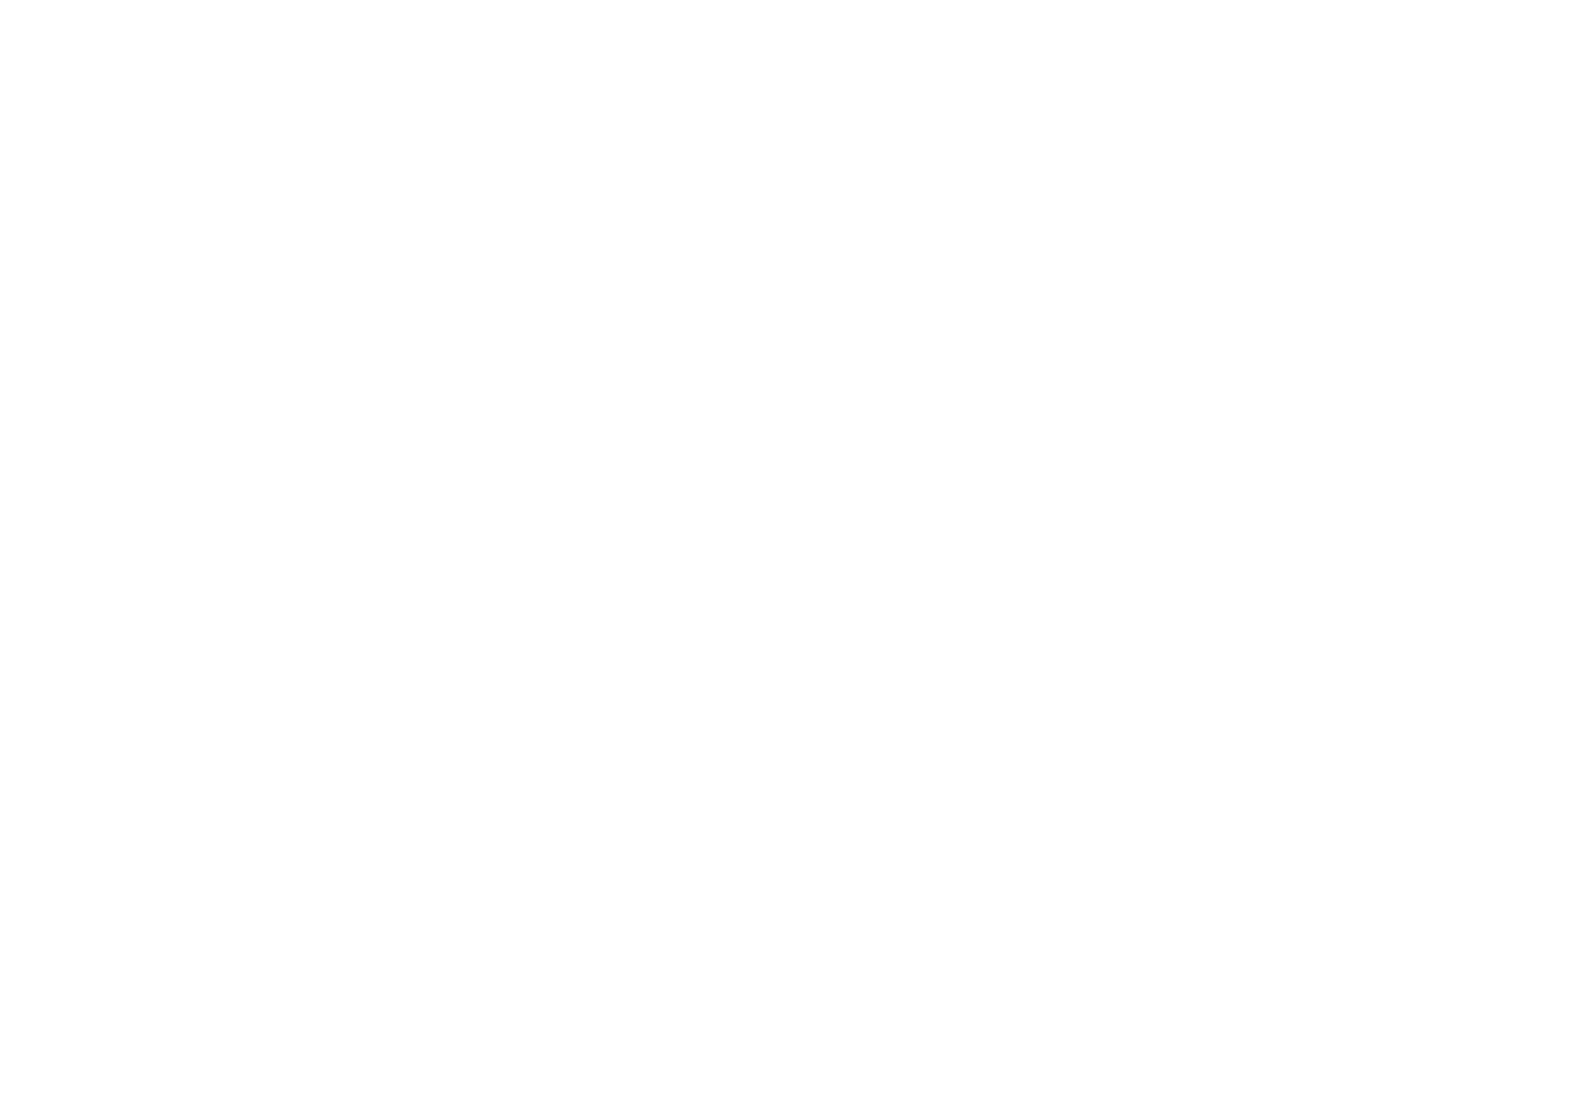 INET PRODUCTIONS INC